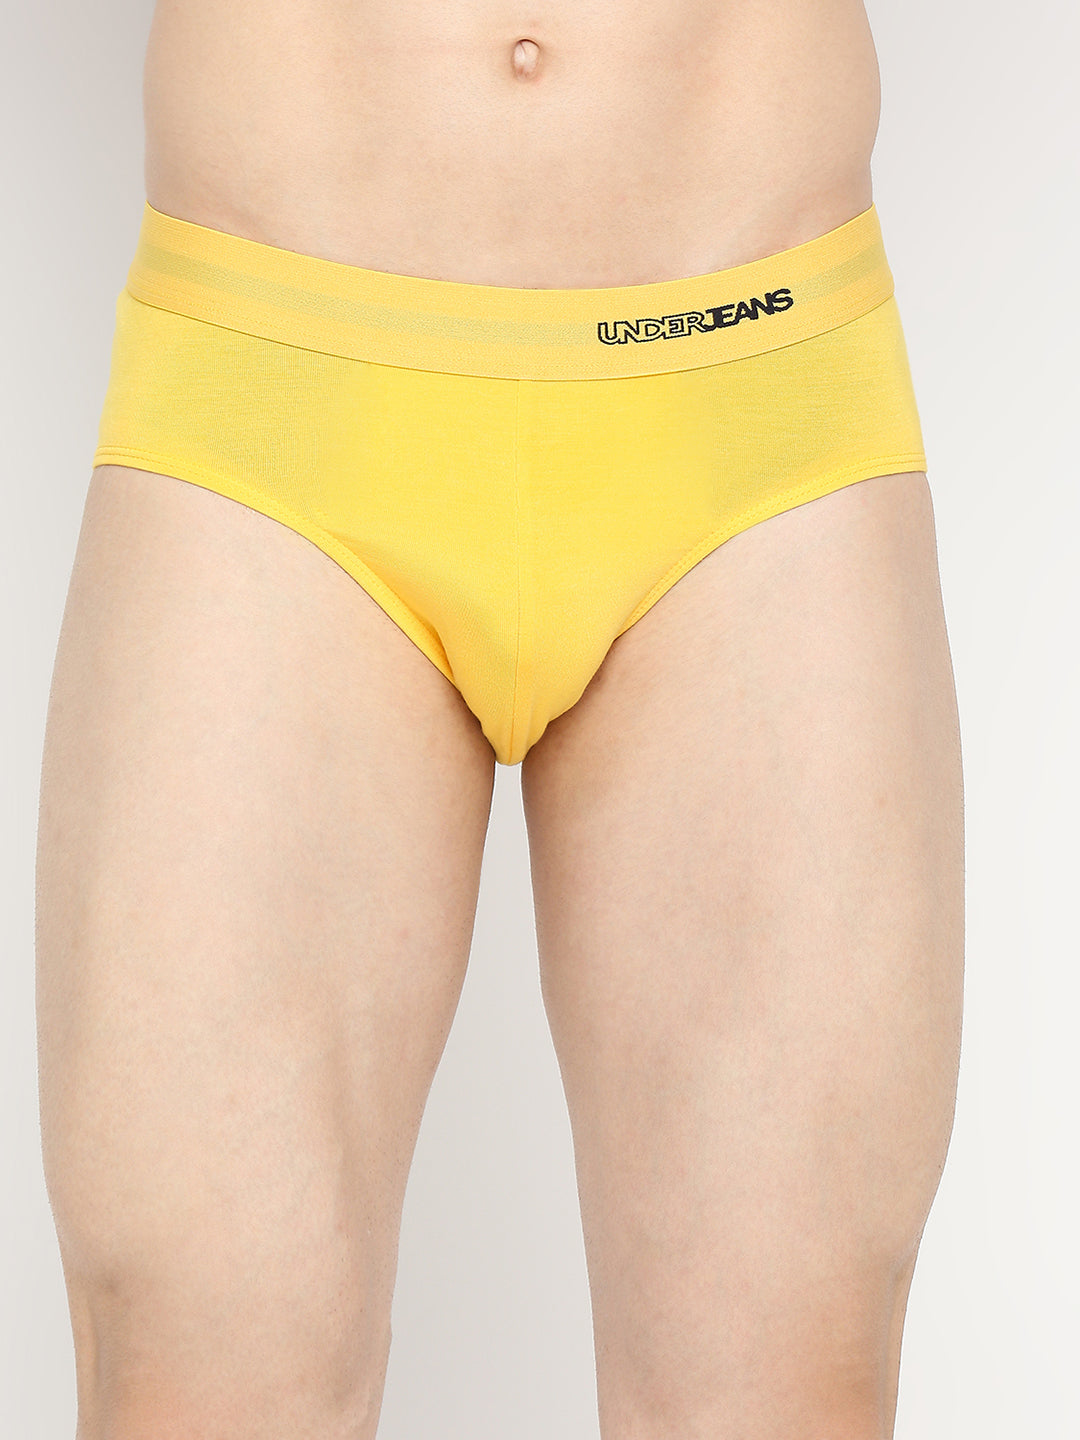 Men Premium Micromodal Yellow Brief - UnderJeans by Spykar